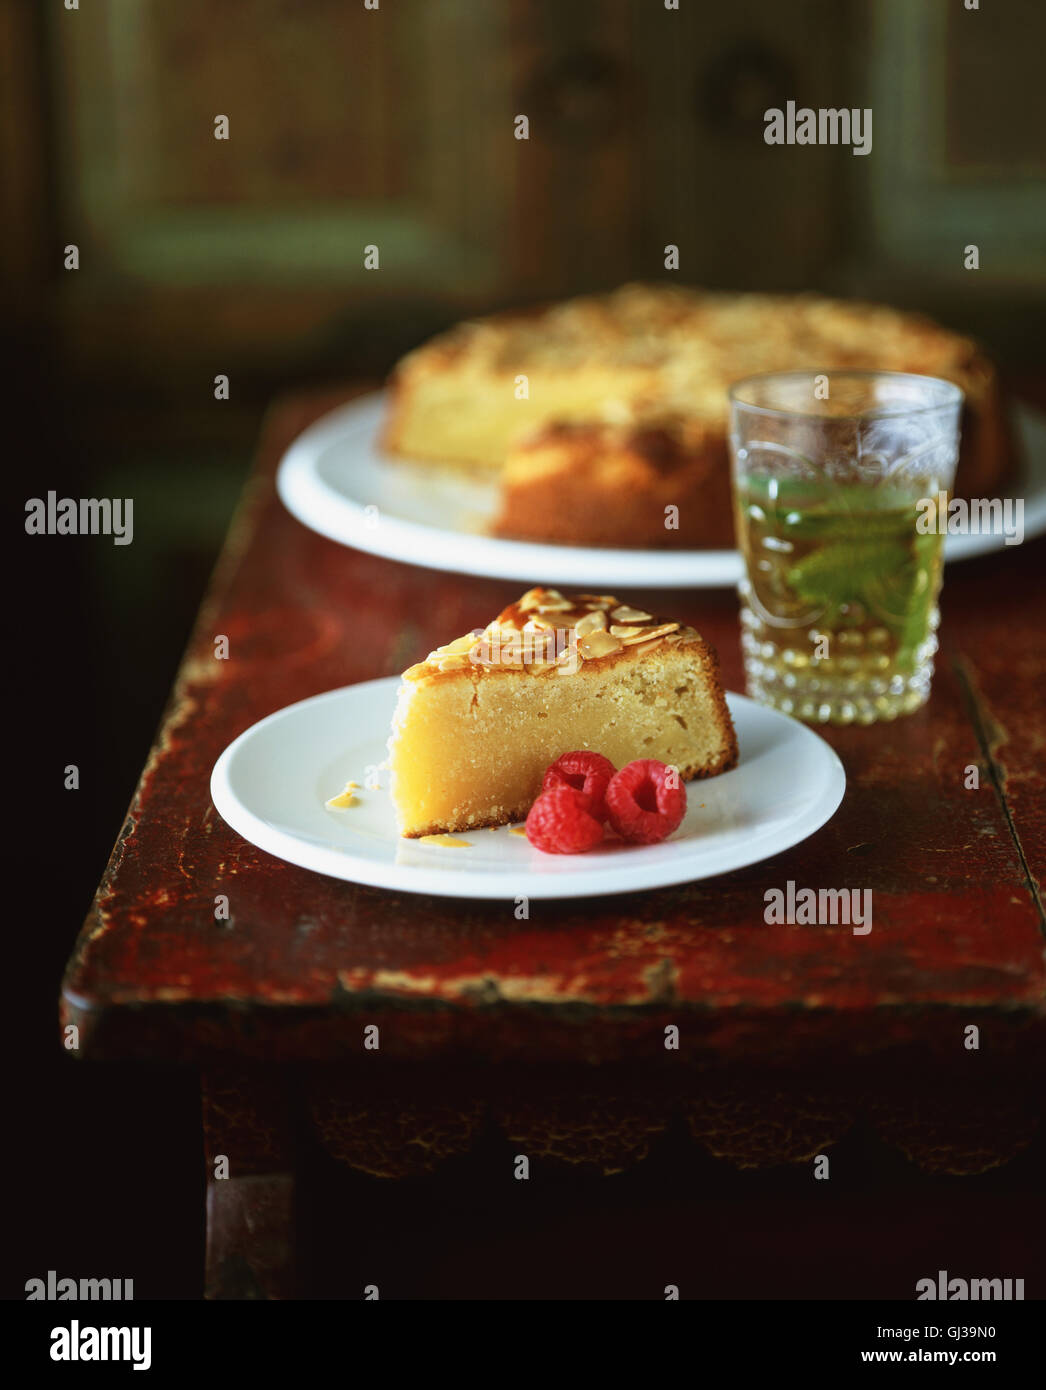 Slice of almond polenta cake with raspberries Stock Photo